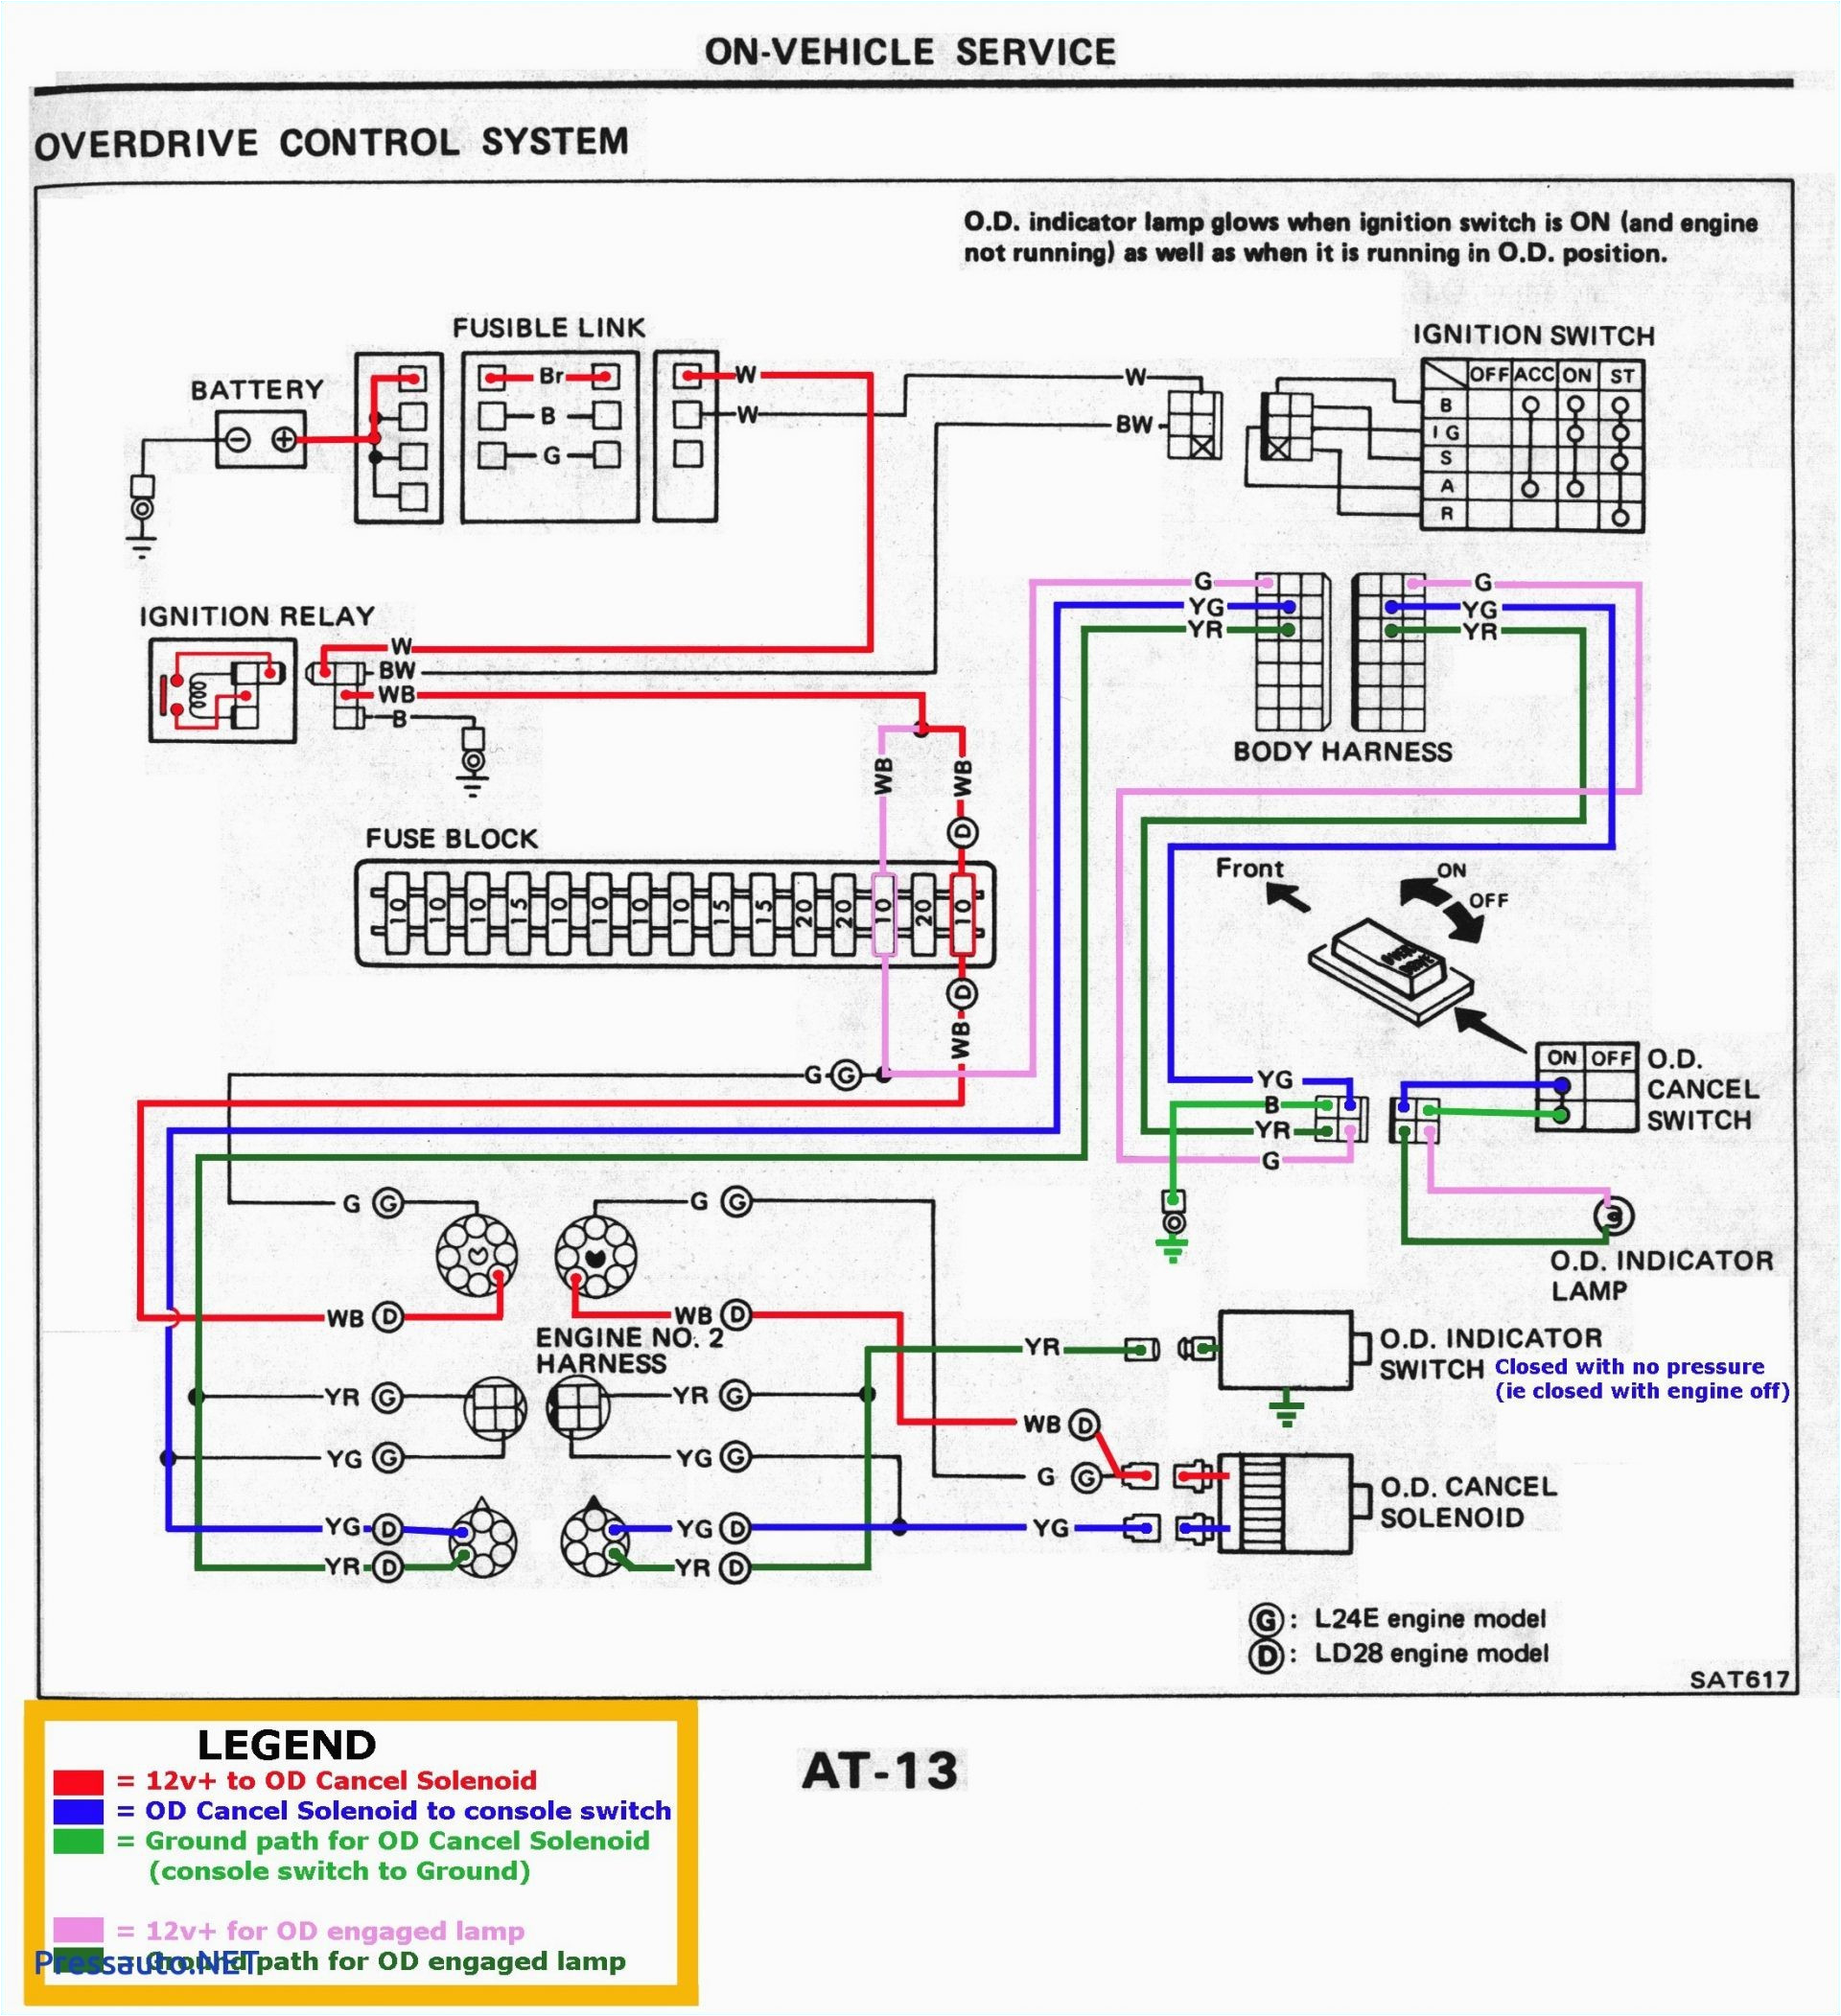 2002 silverado wiring diagram pdf wiring diagram world 2002 silverado wiring diagram pdf